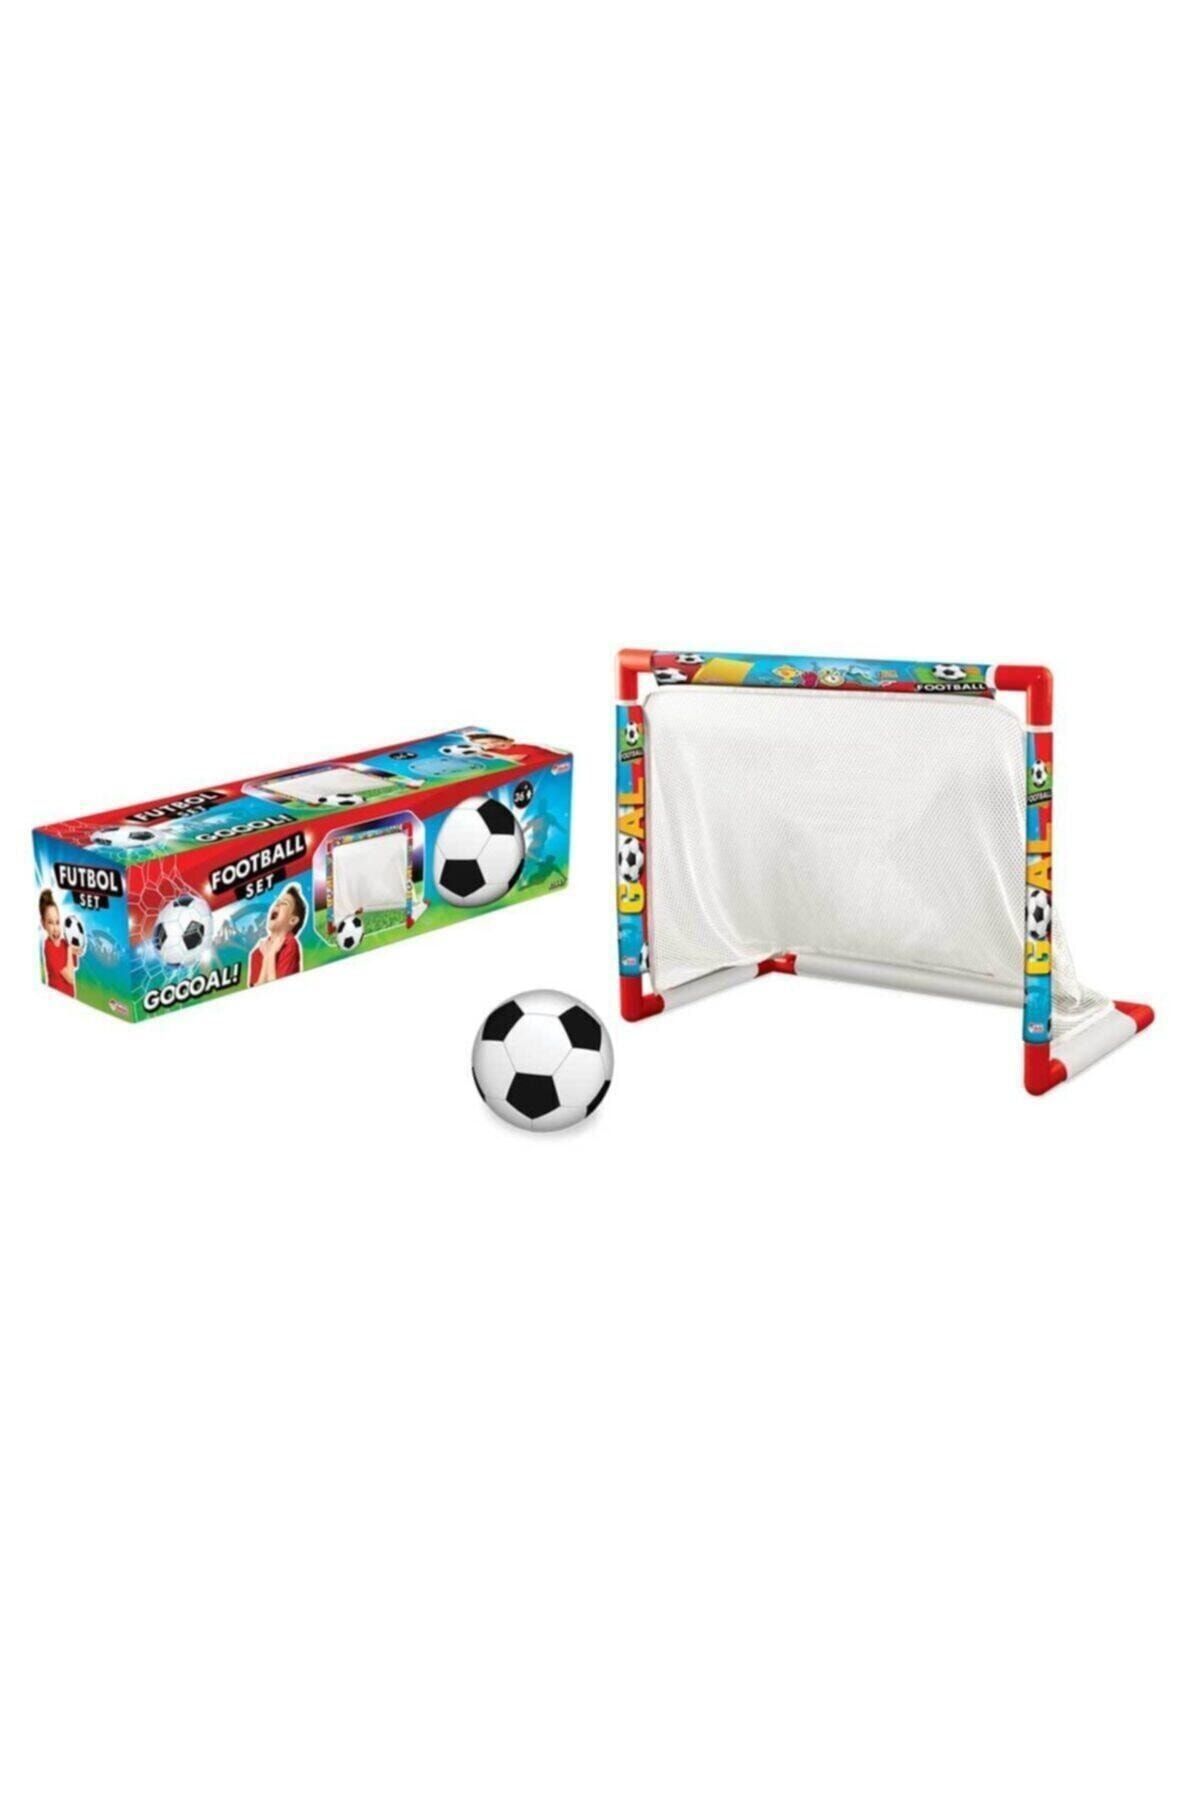 DEDE Futbol Set Kale + Top Maç Oyun Seti